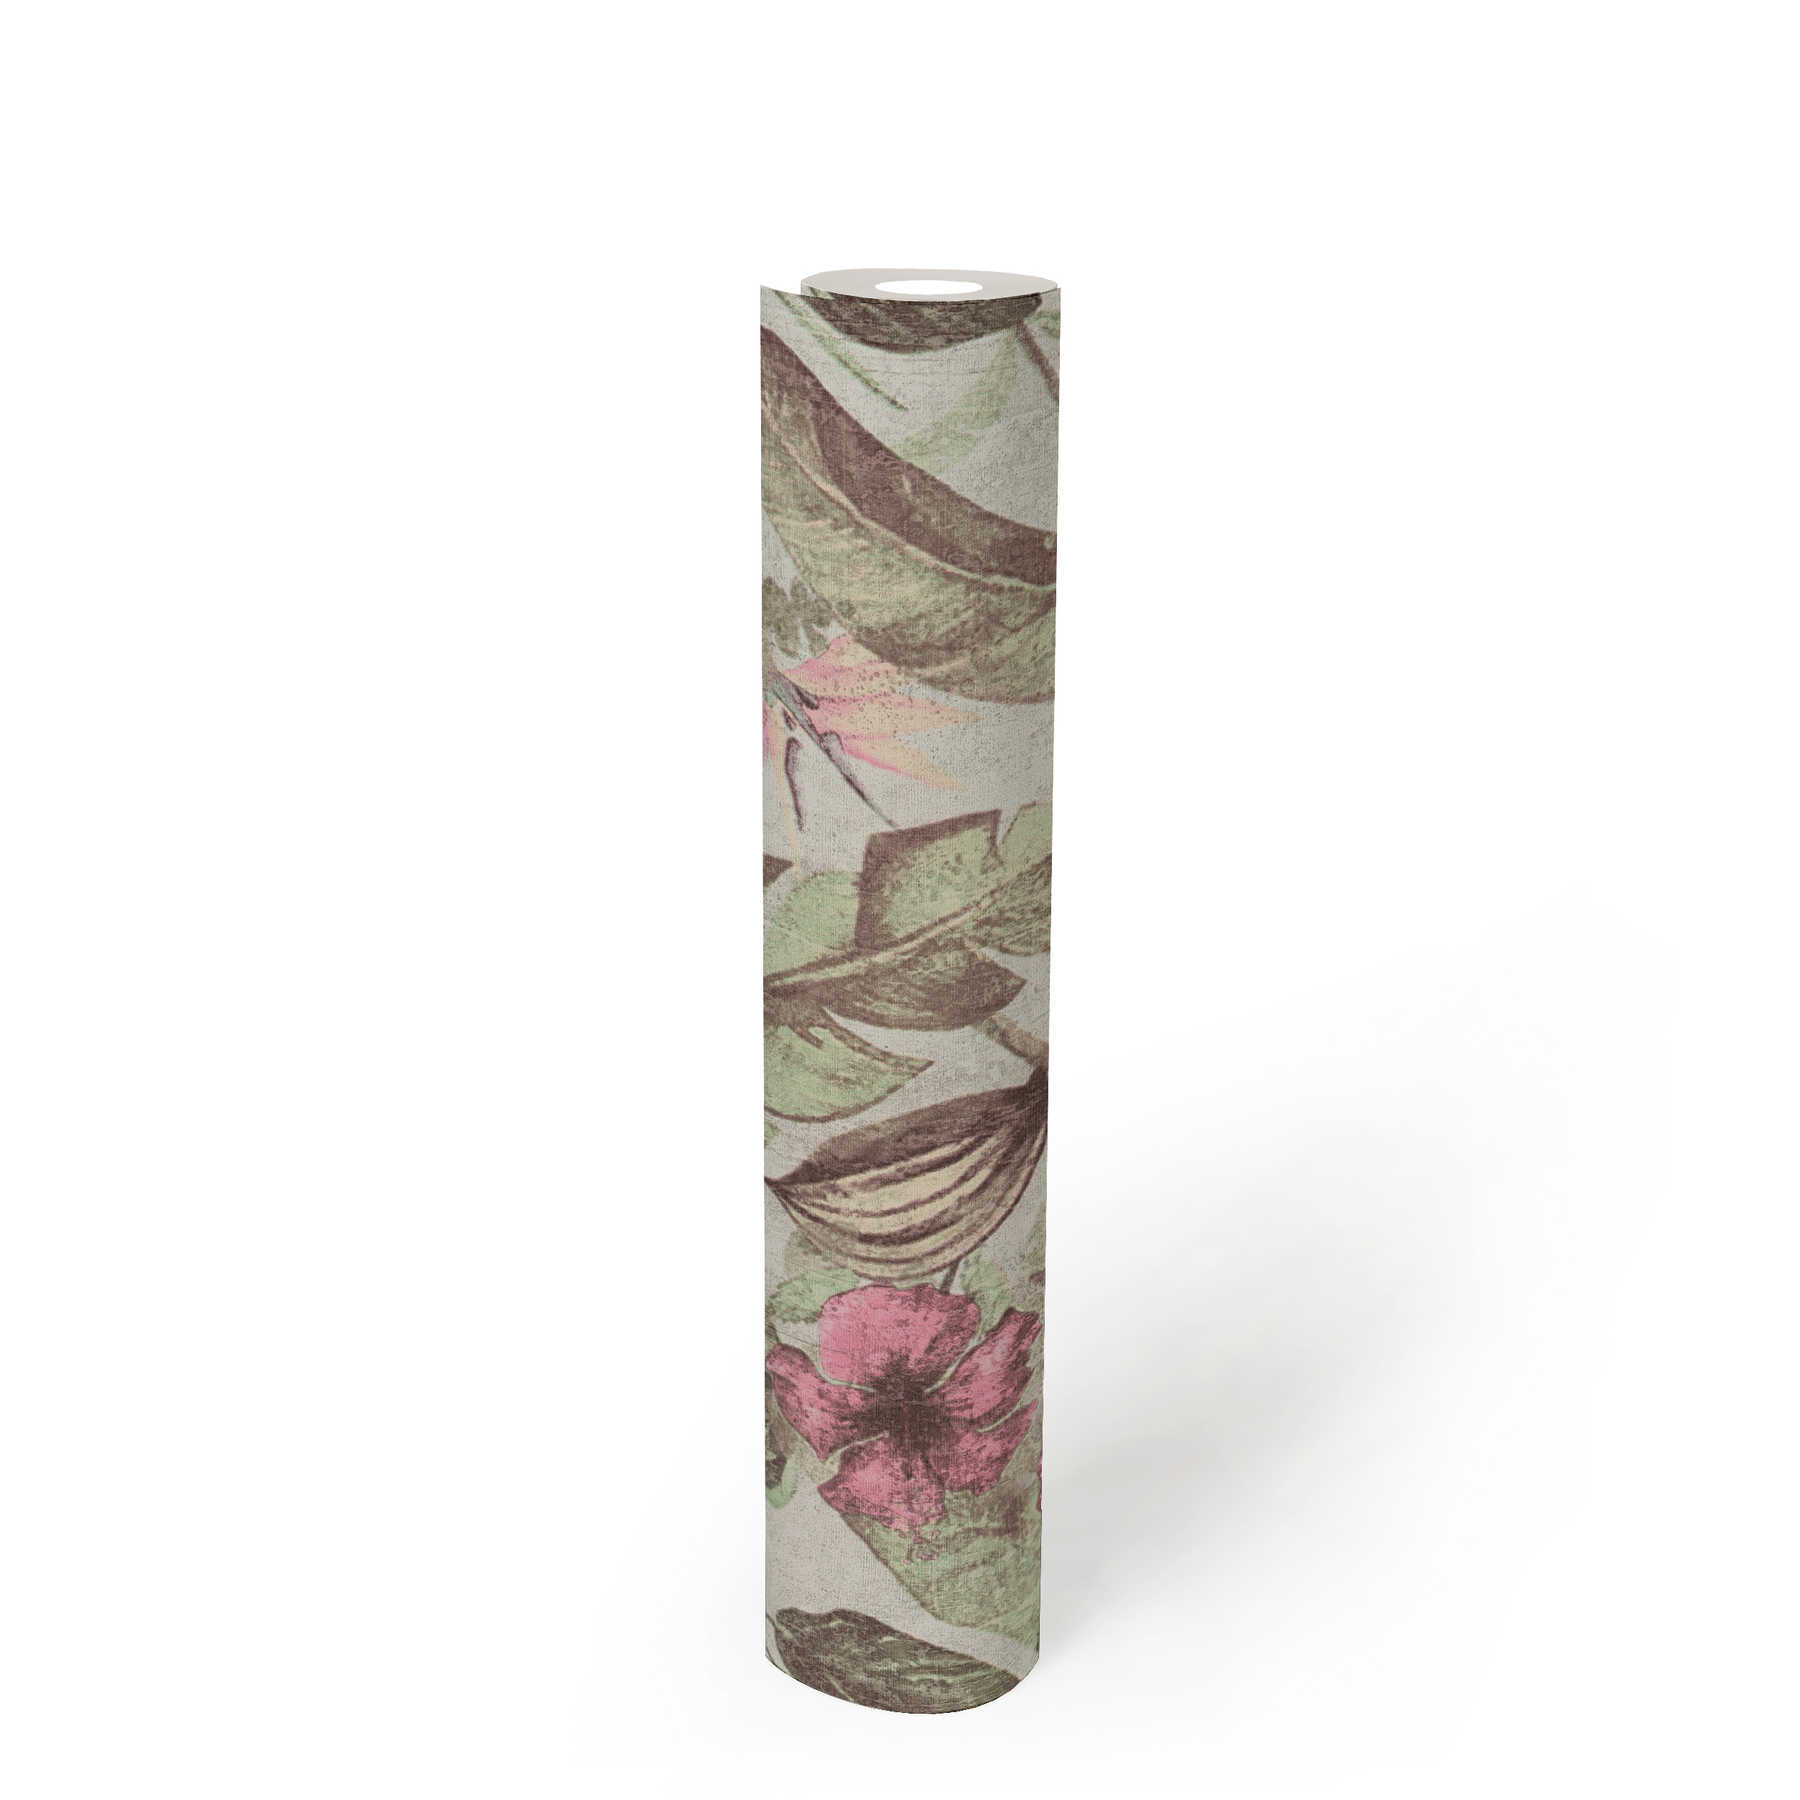             Tapete Blütenmuster, Tropen Stil & Textil-Optik – Rosa, Grün, Braun
        